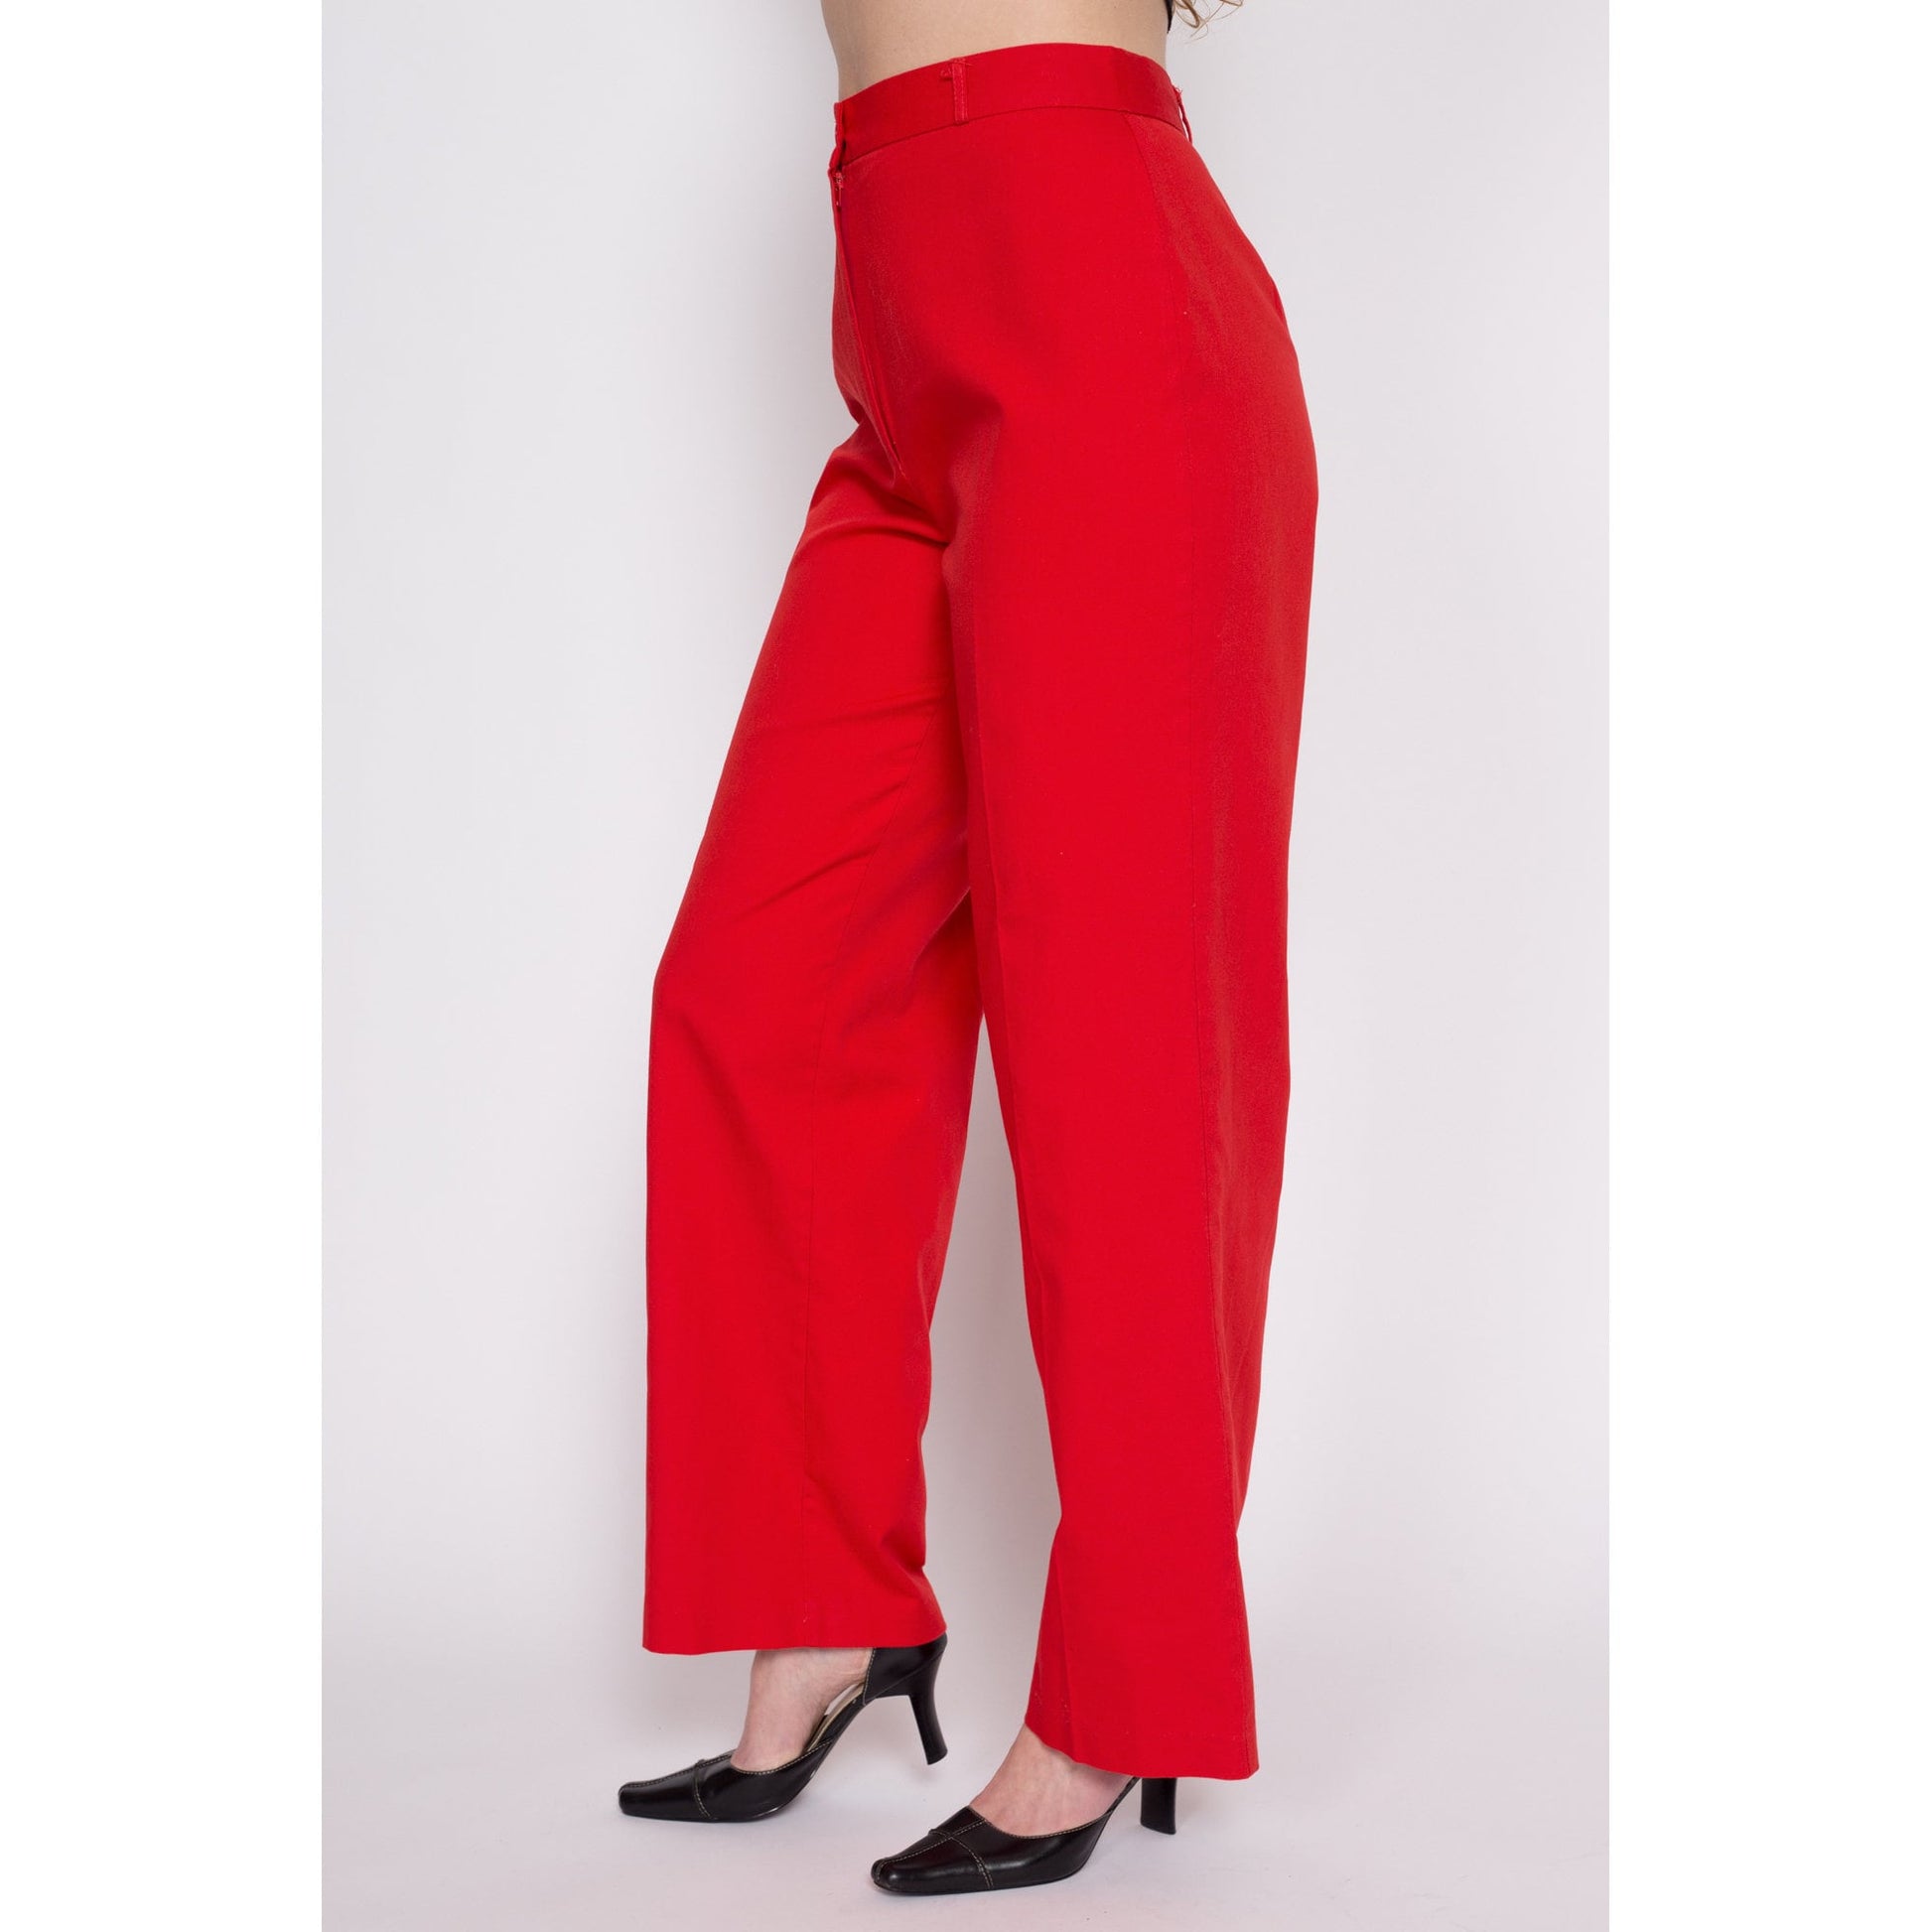 70s Red High Waisted Pants - Medium, 28.5" | Retro Vintage Straight Leg Trousers